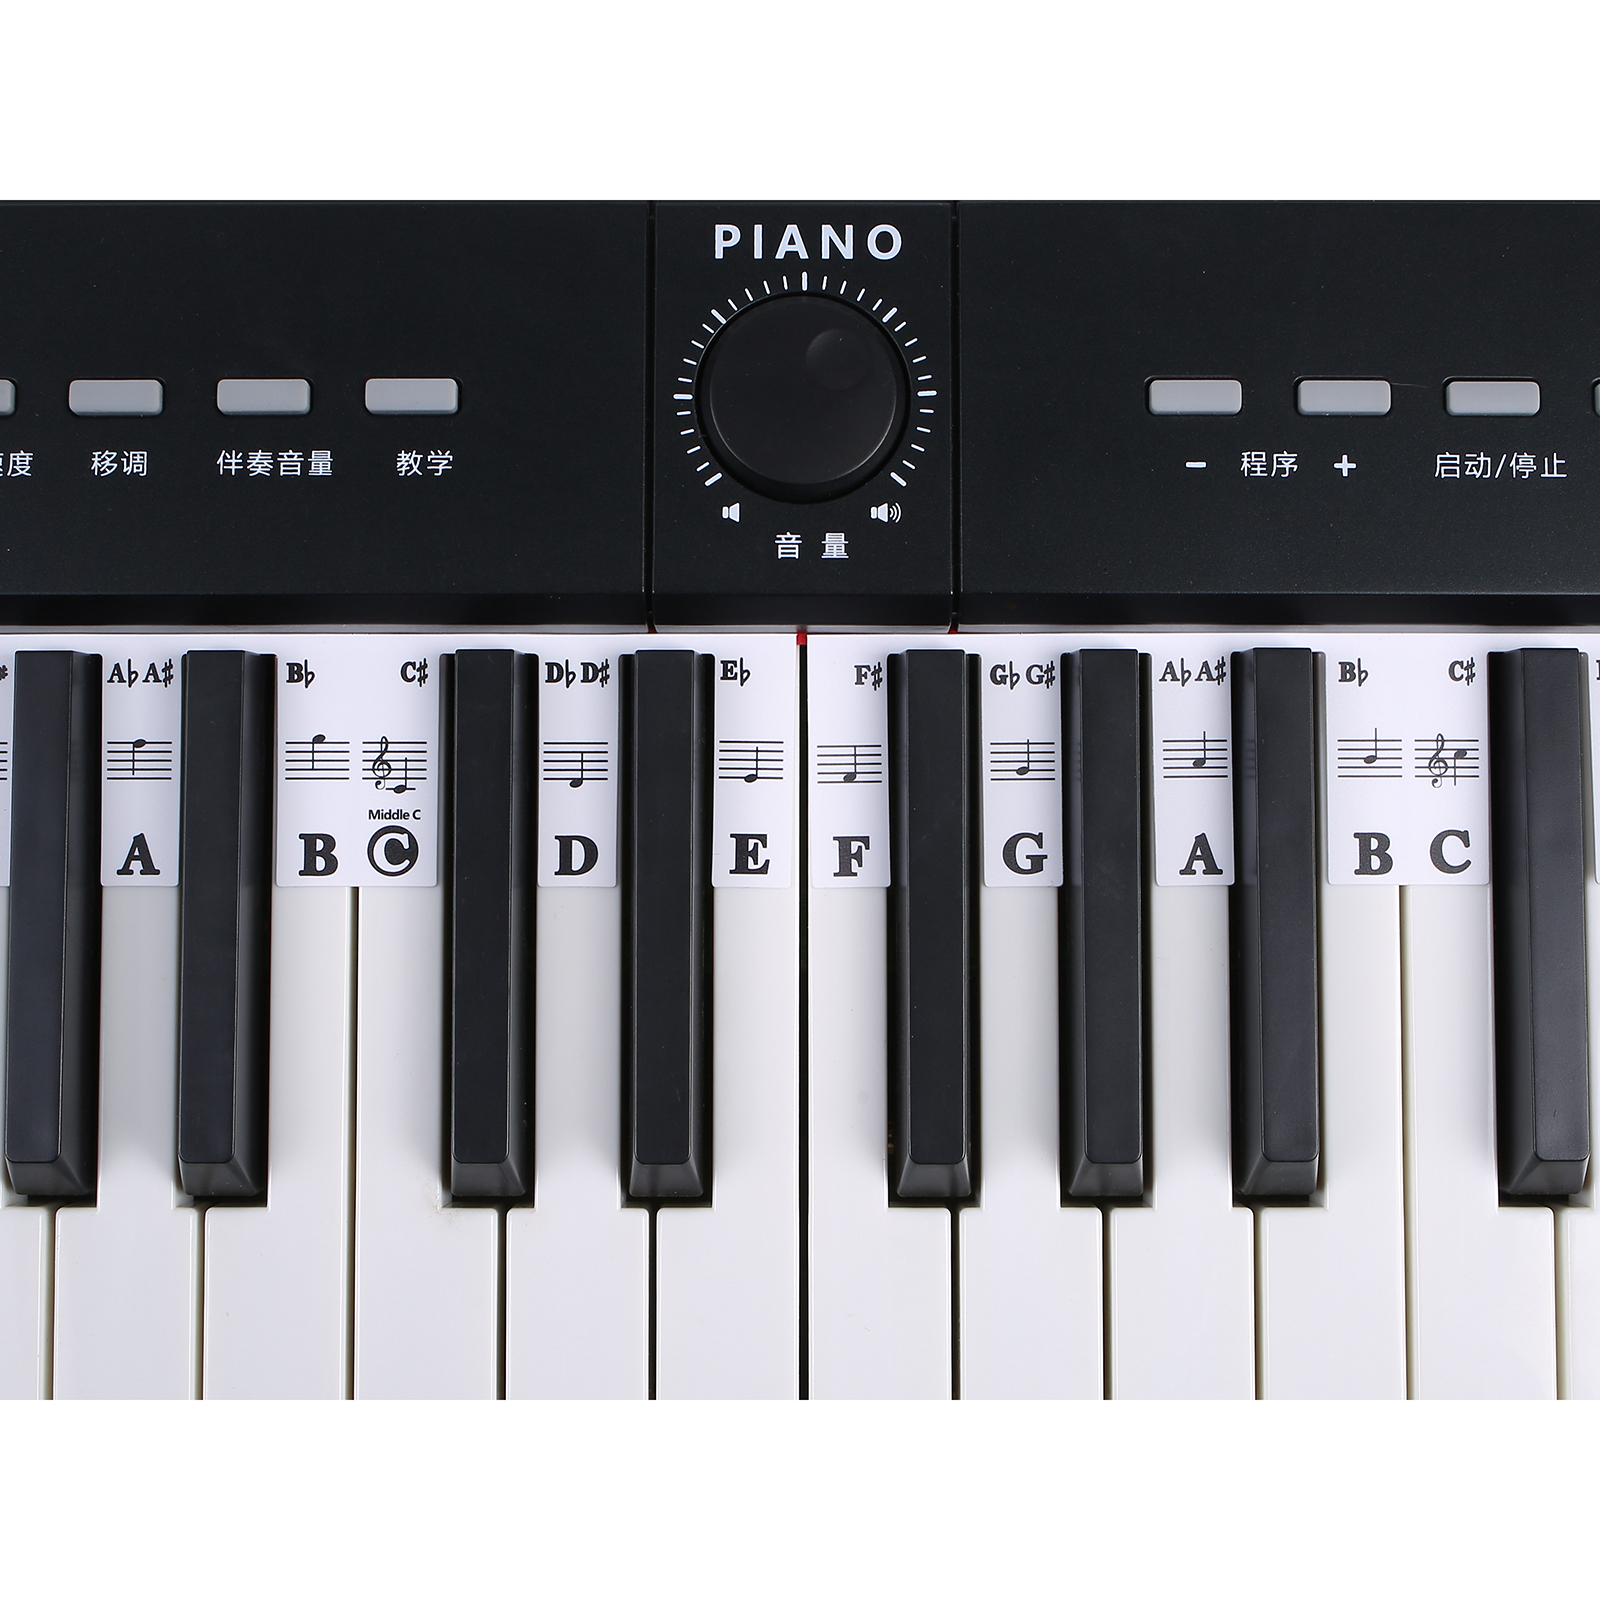 Atyhao étiquette de guide de notes de piano Étiquette de note de clavier de  piano Autocollant de guide de notes de piano 14574